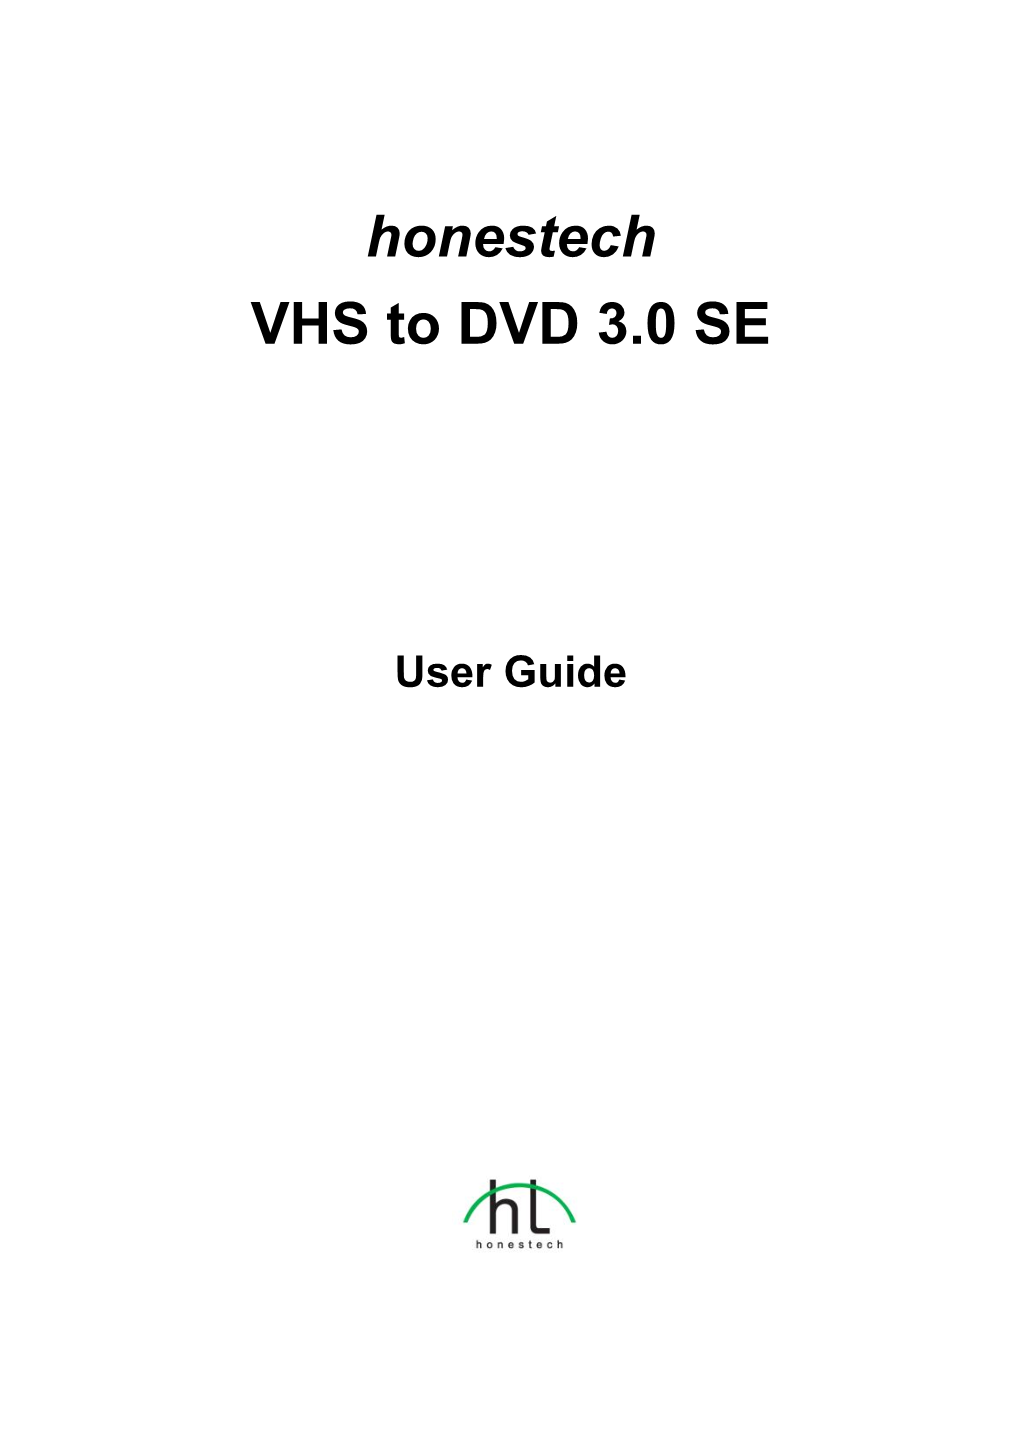 Honestech VHS to DVD 3.0 SE